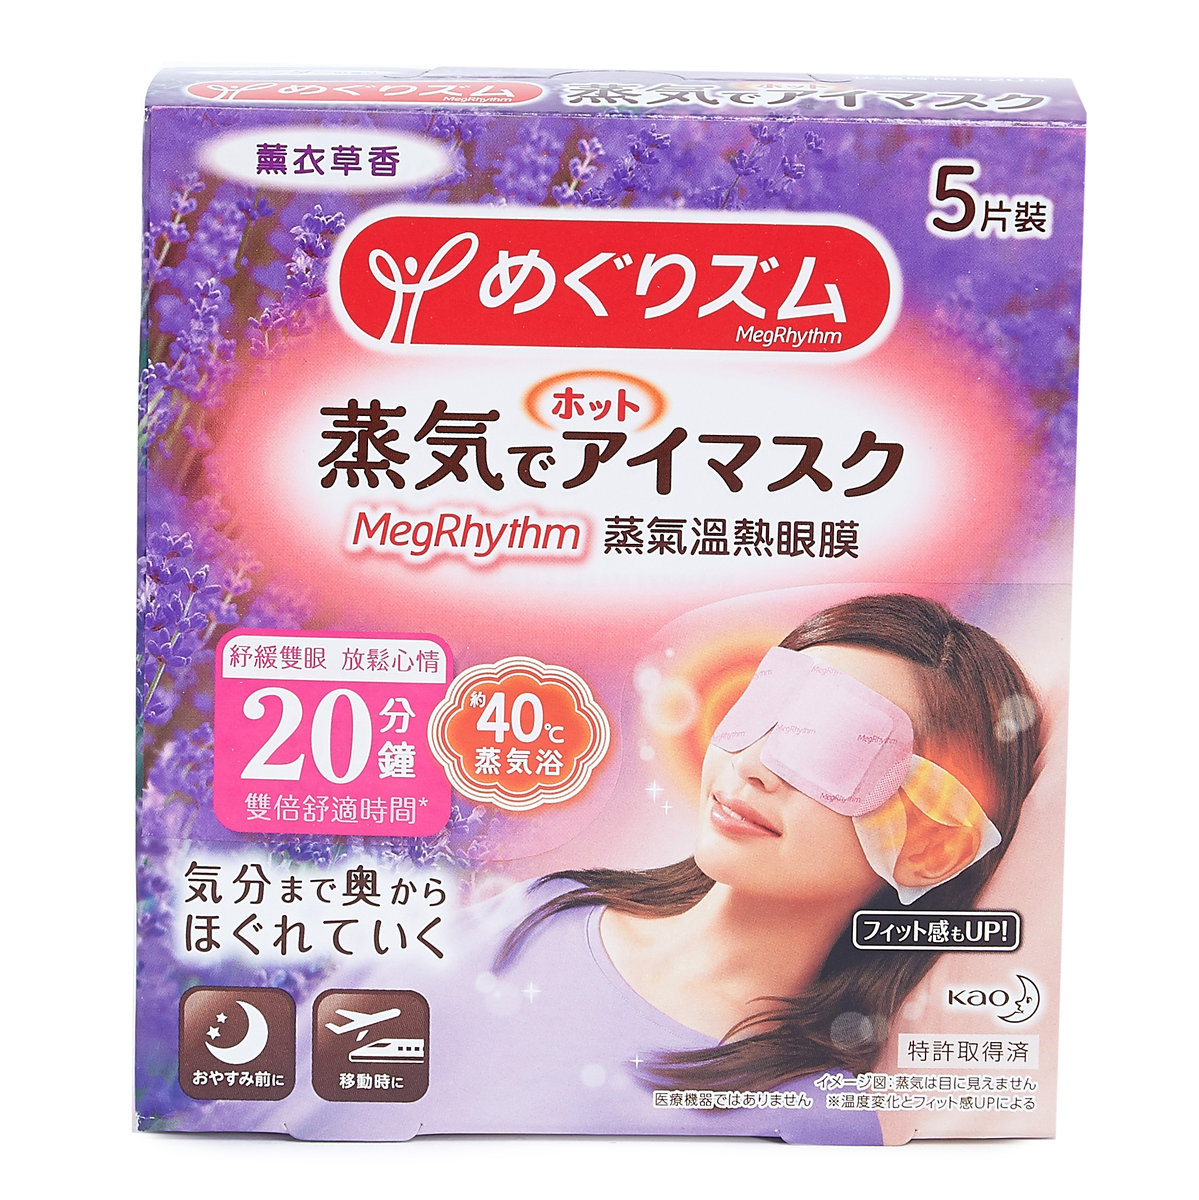 how to use kao steam eye mask